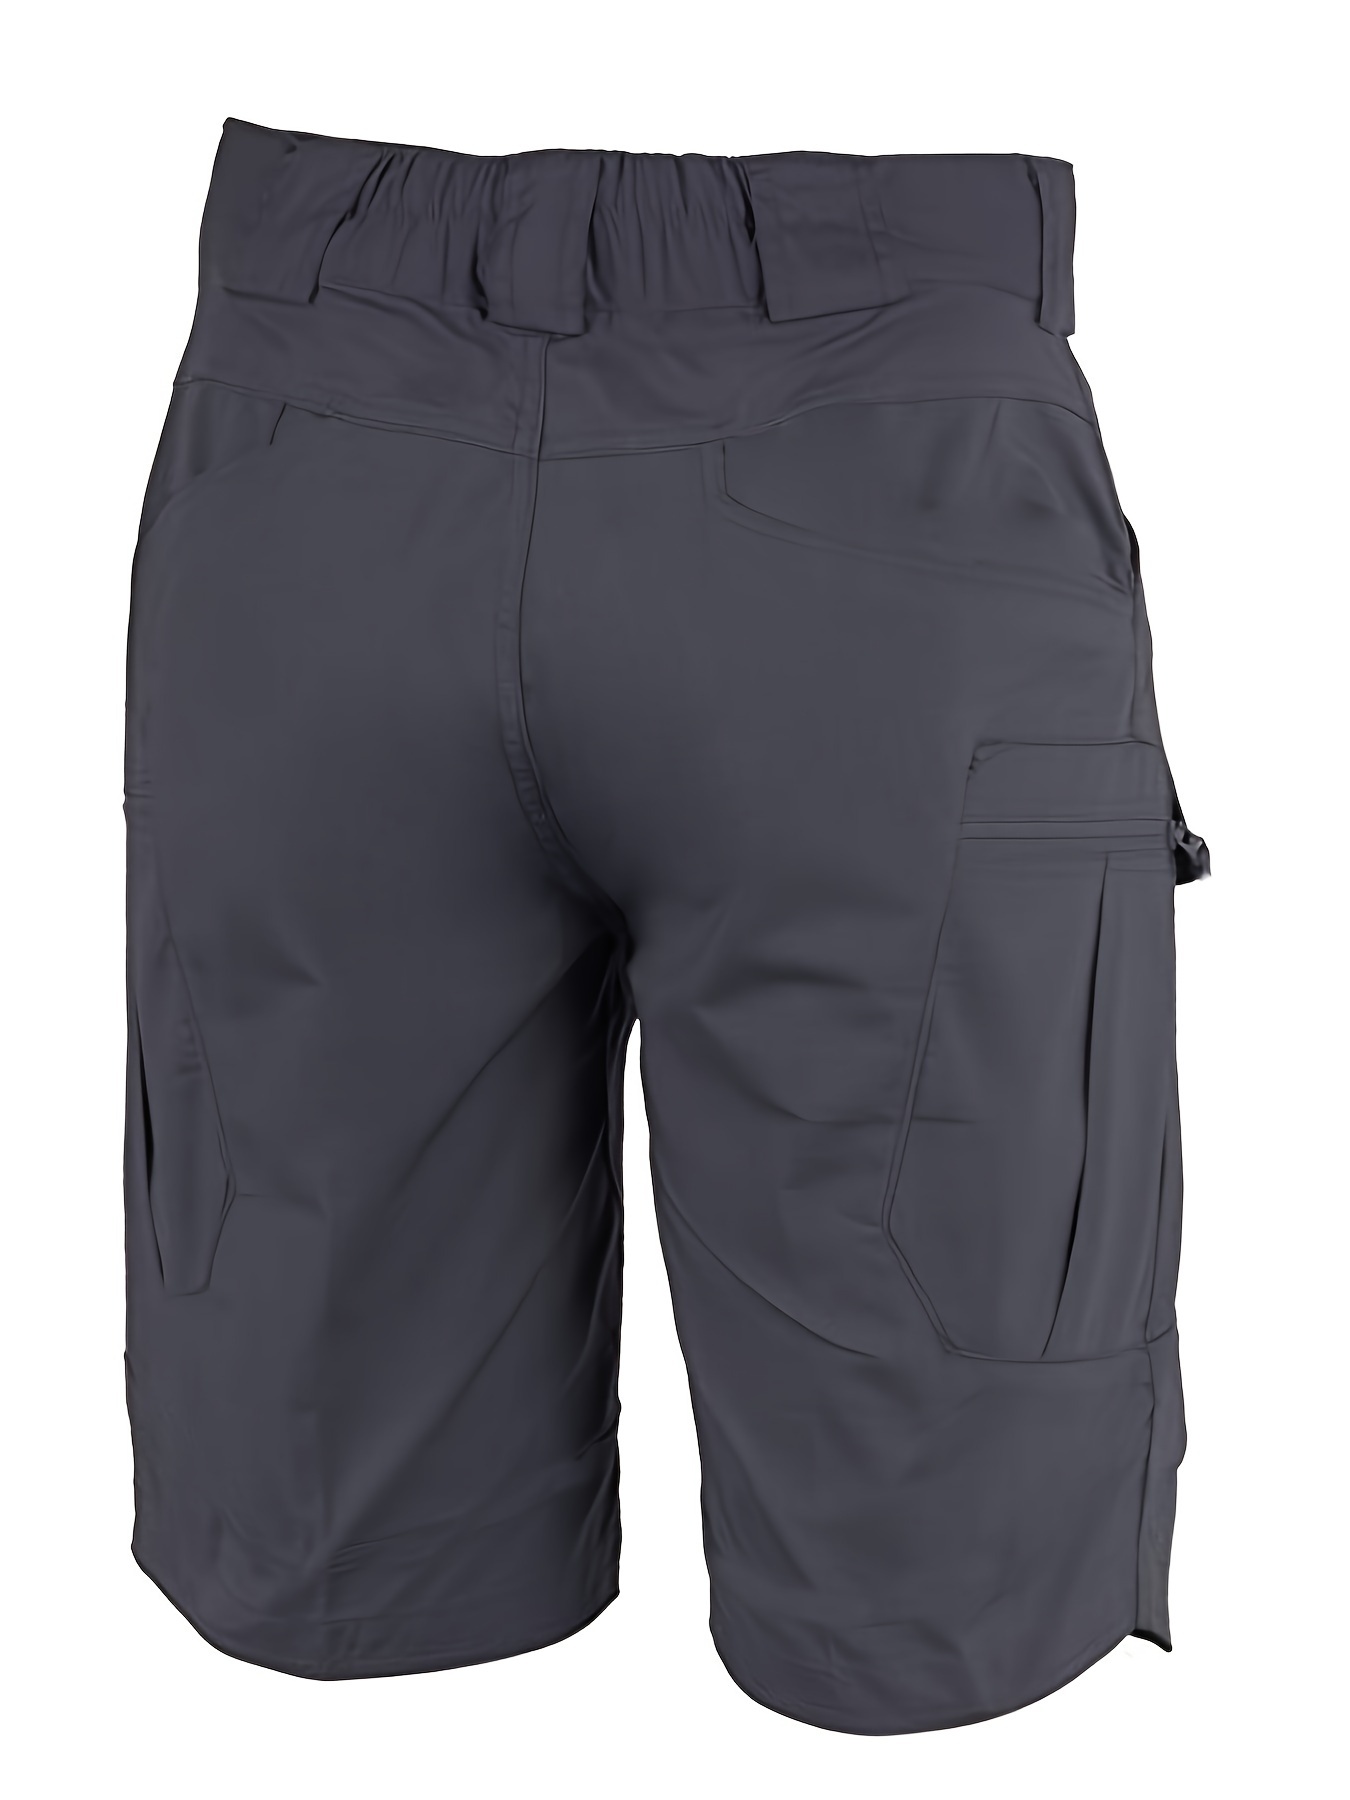 Women's Golf Hiking Shorts Lightweight Quick Dry 9 Cargo Bermuda Long Shorts  Knee Length with Pockets for Women Khaki X-Large